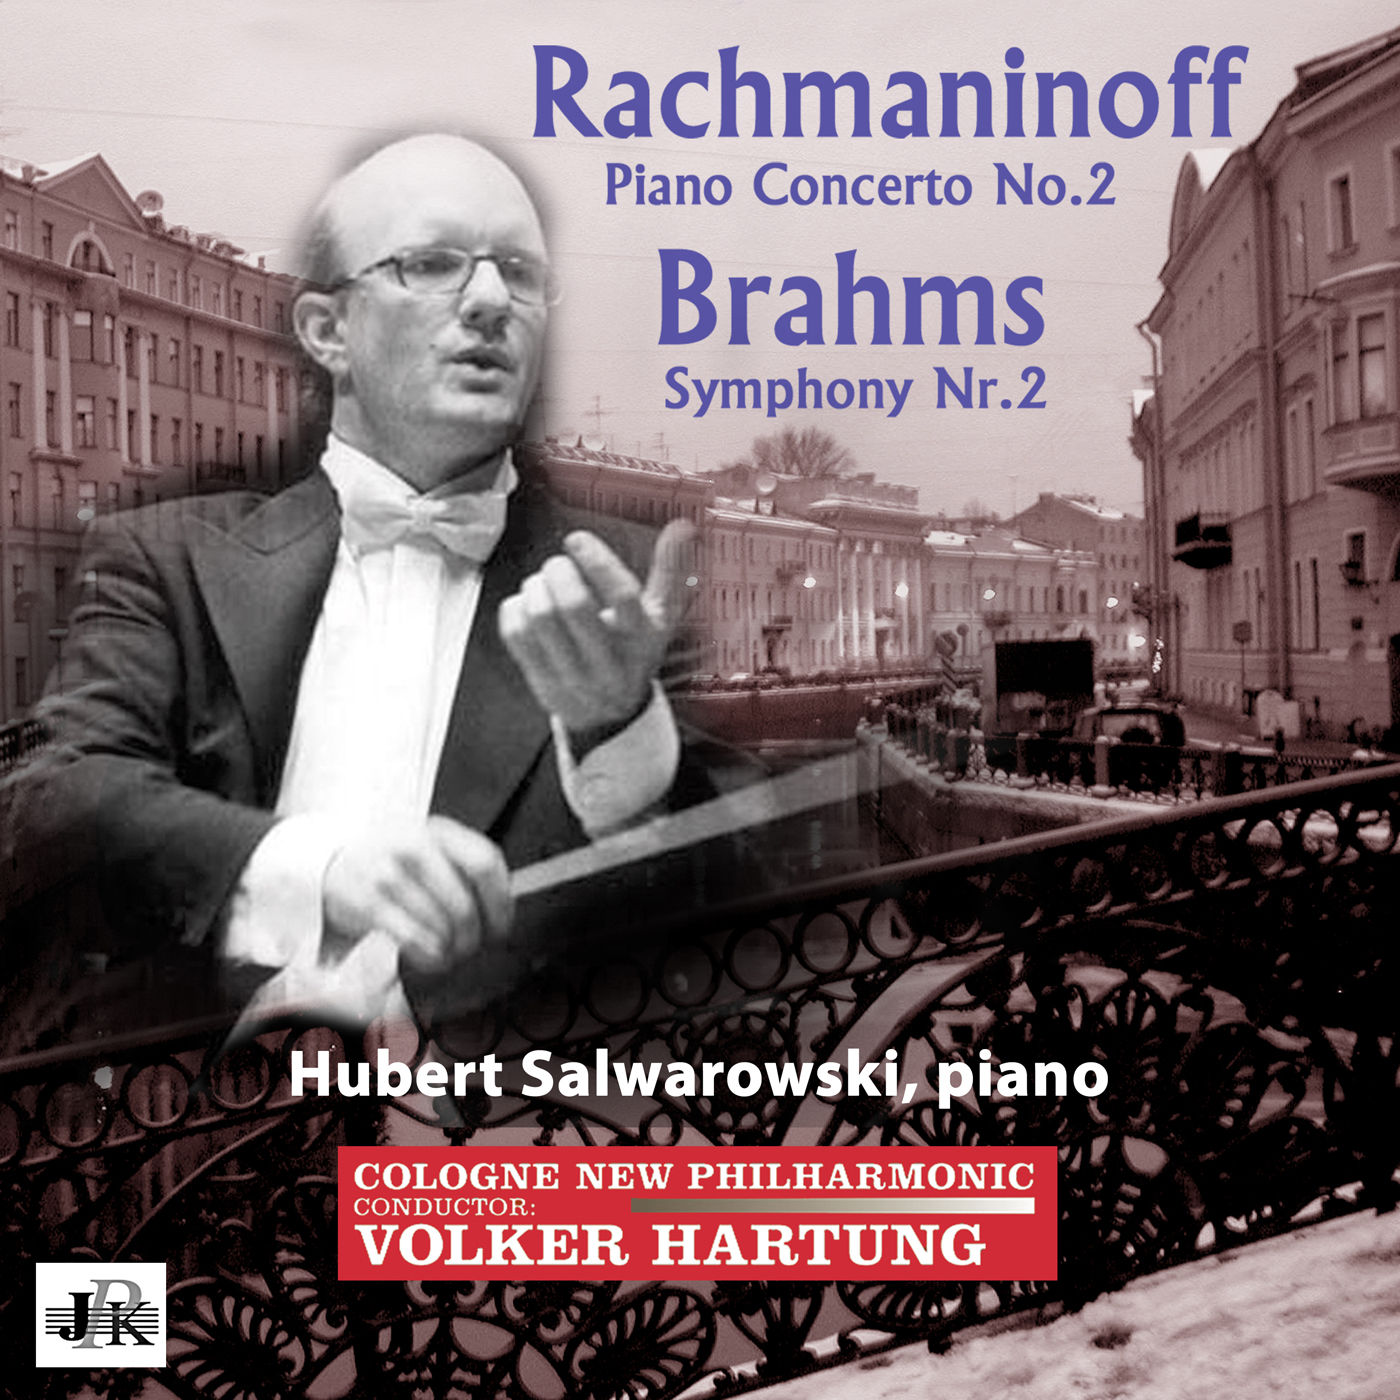 Hubert Salwarowski, Cologne New Philharmonic Orchestra, Volker Hartung – Rachmaninov & Brahms (2016) [FLAC 24bit/48kHz]